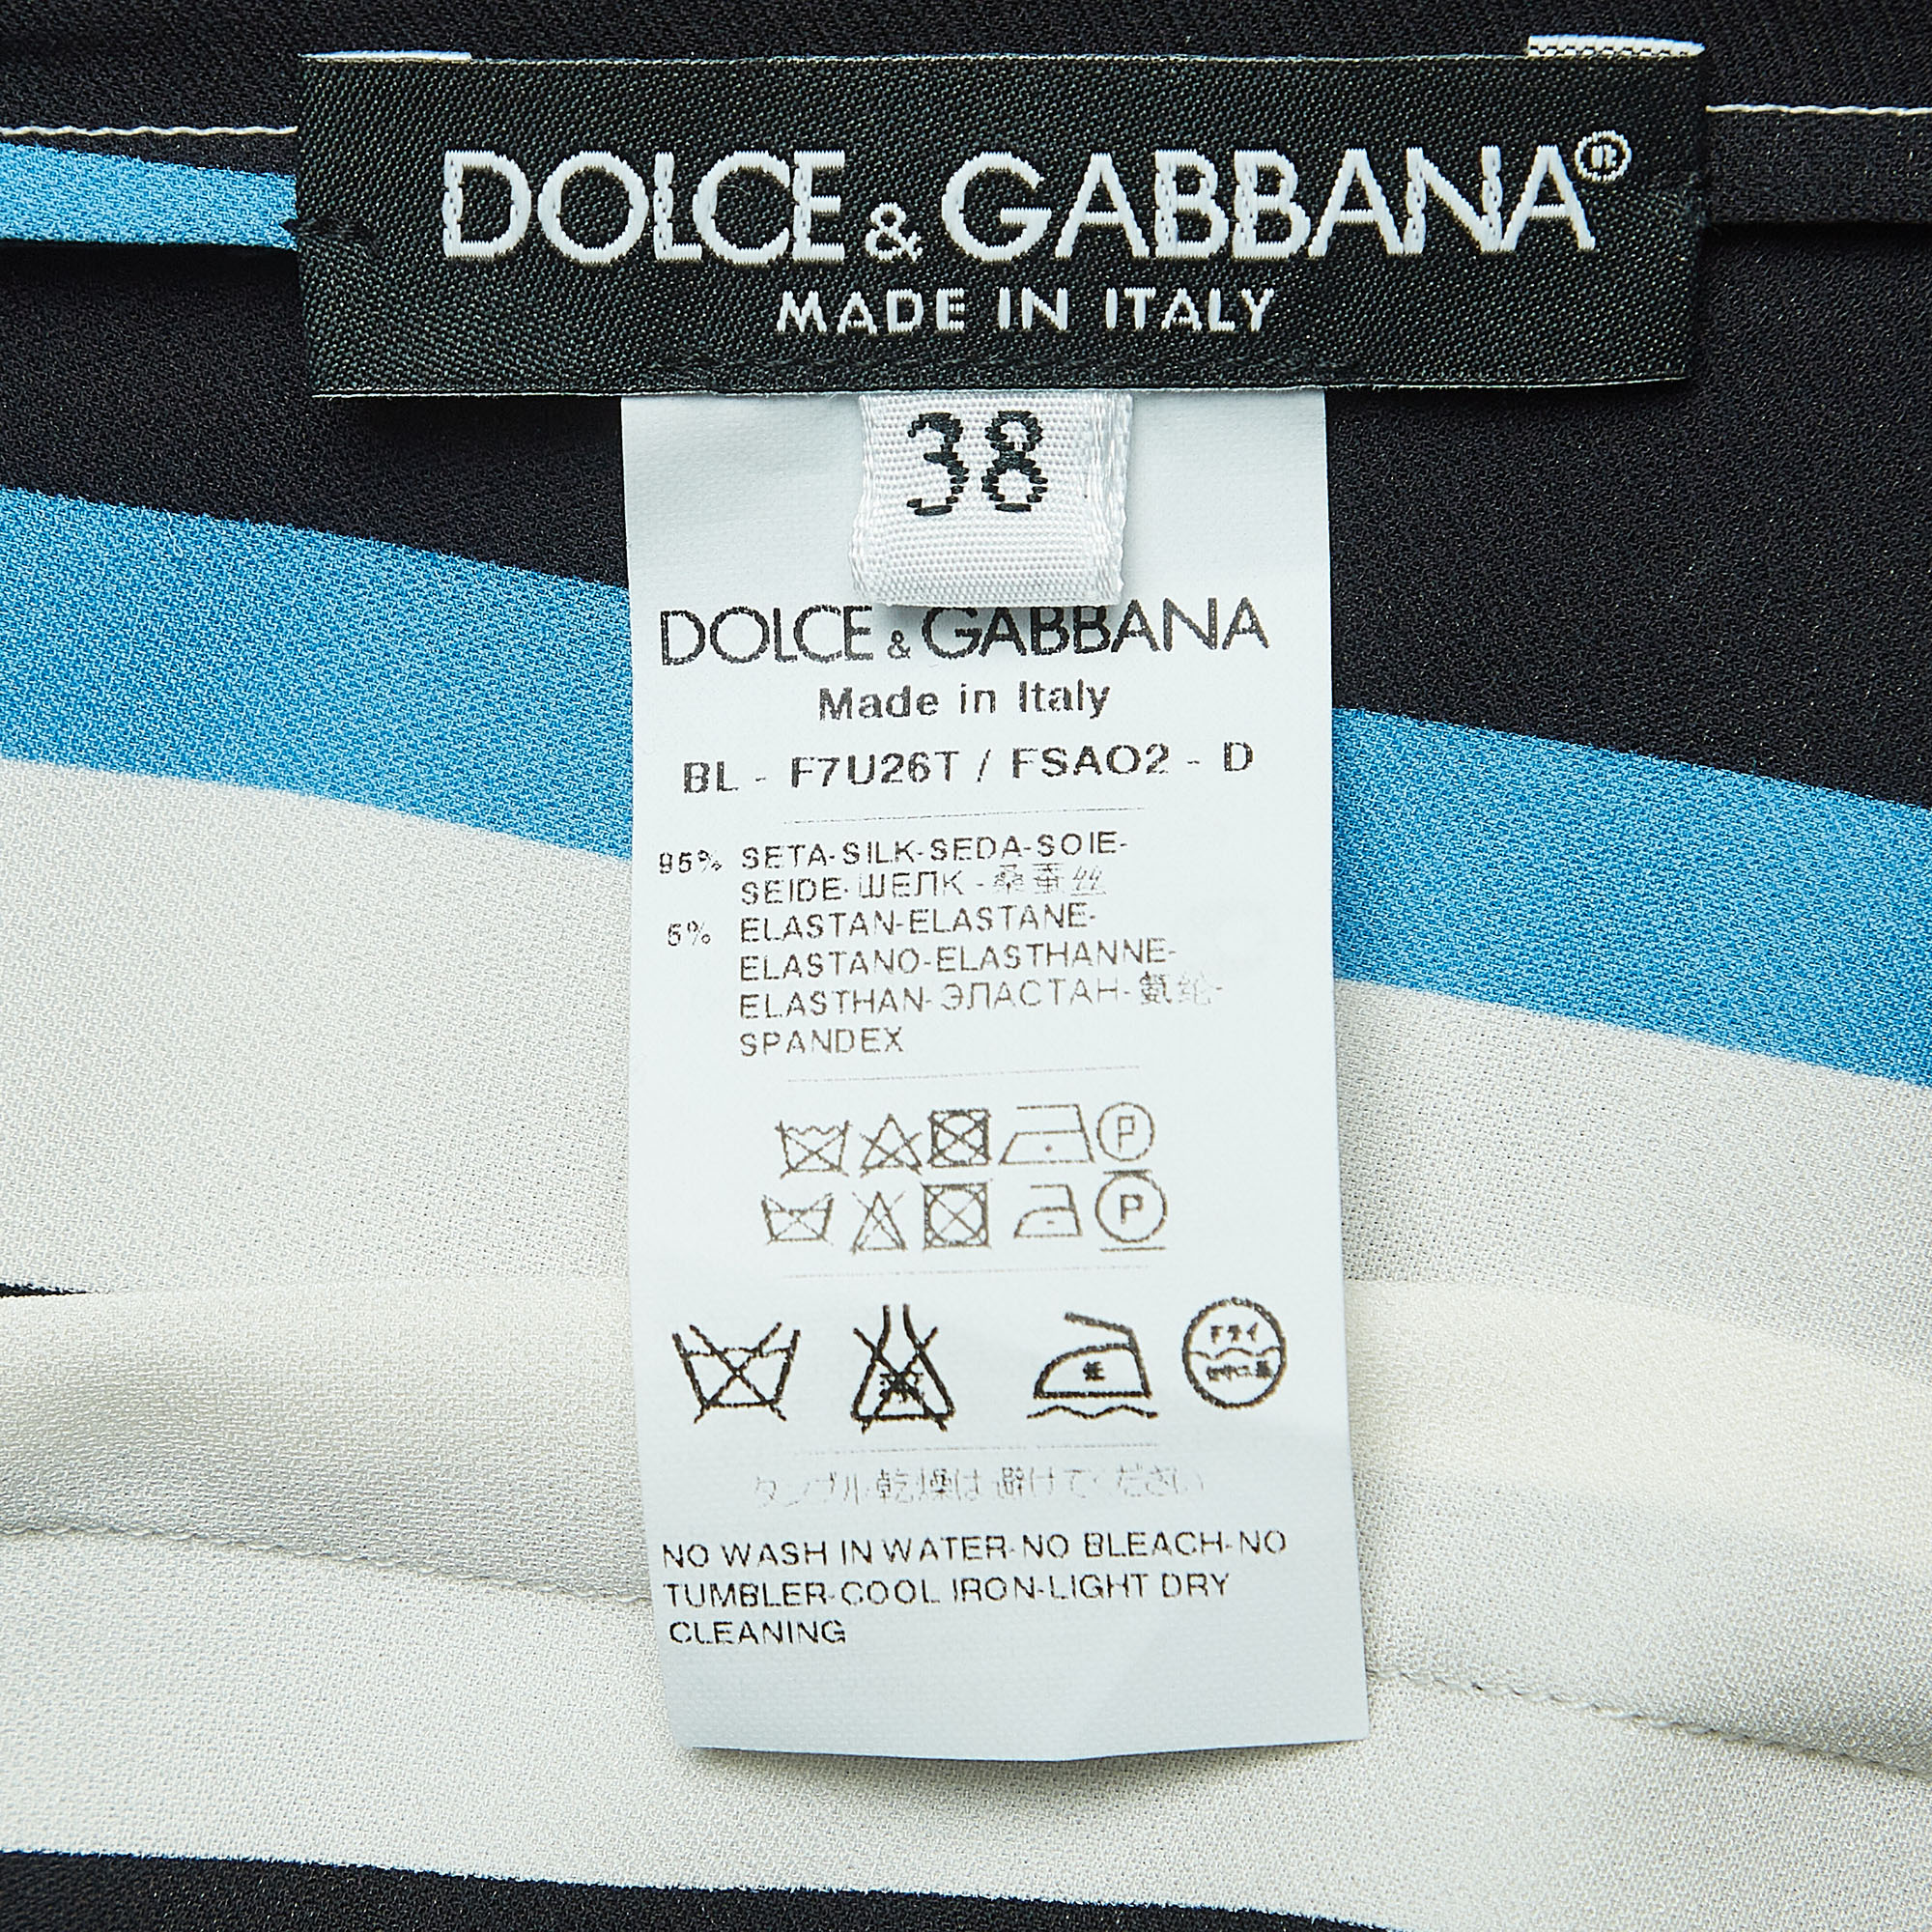 Dolce & Gabbana Multicolor Striped Silk Long Sleeve Blouse S